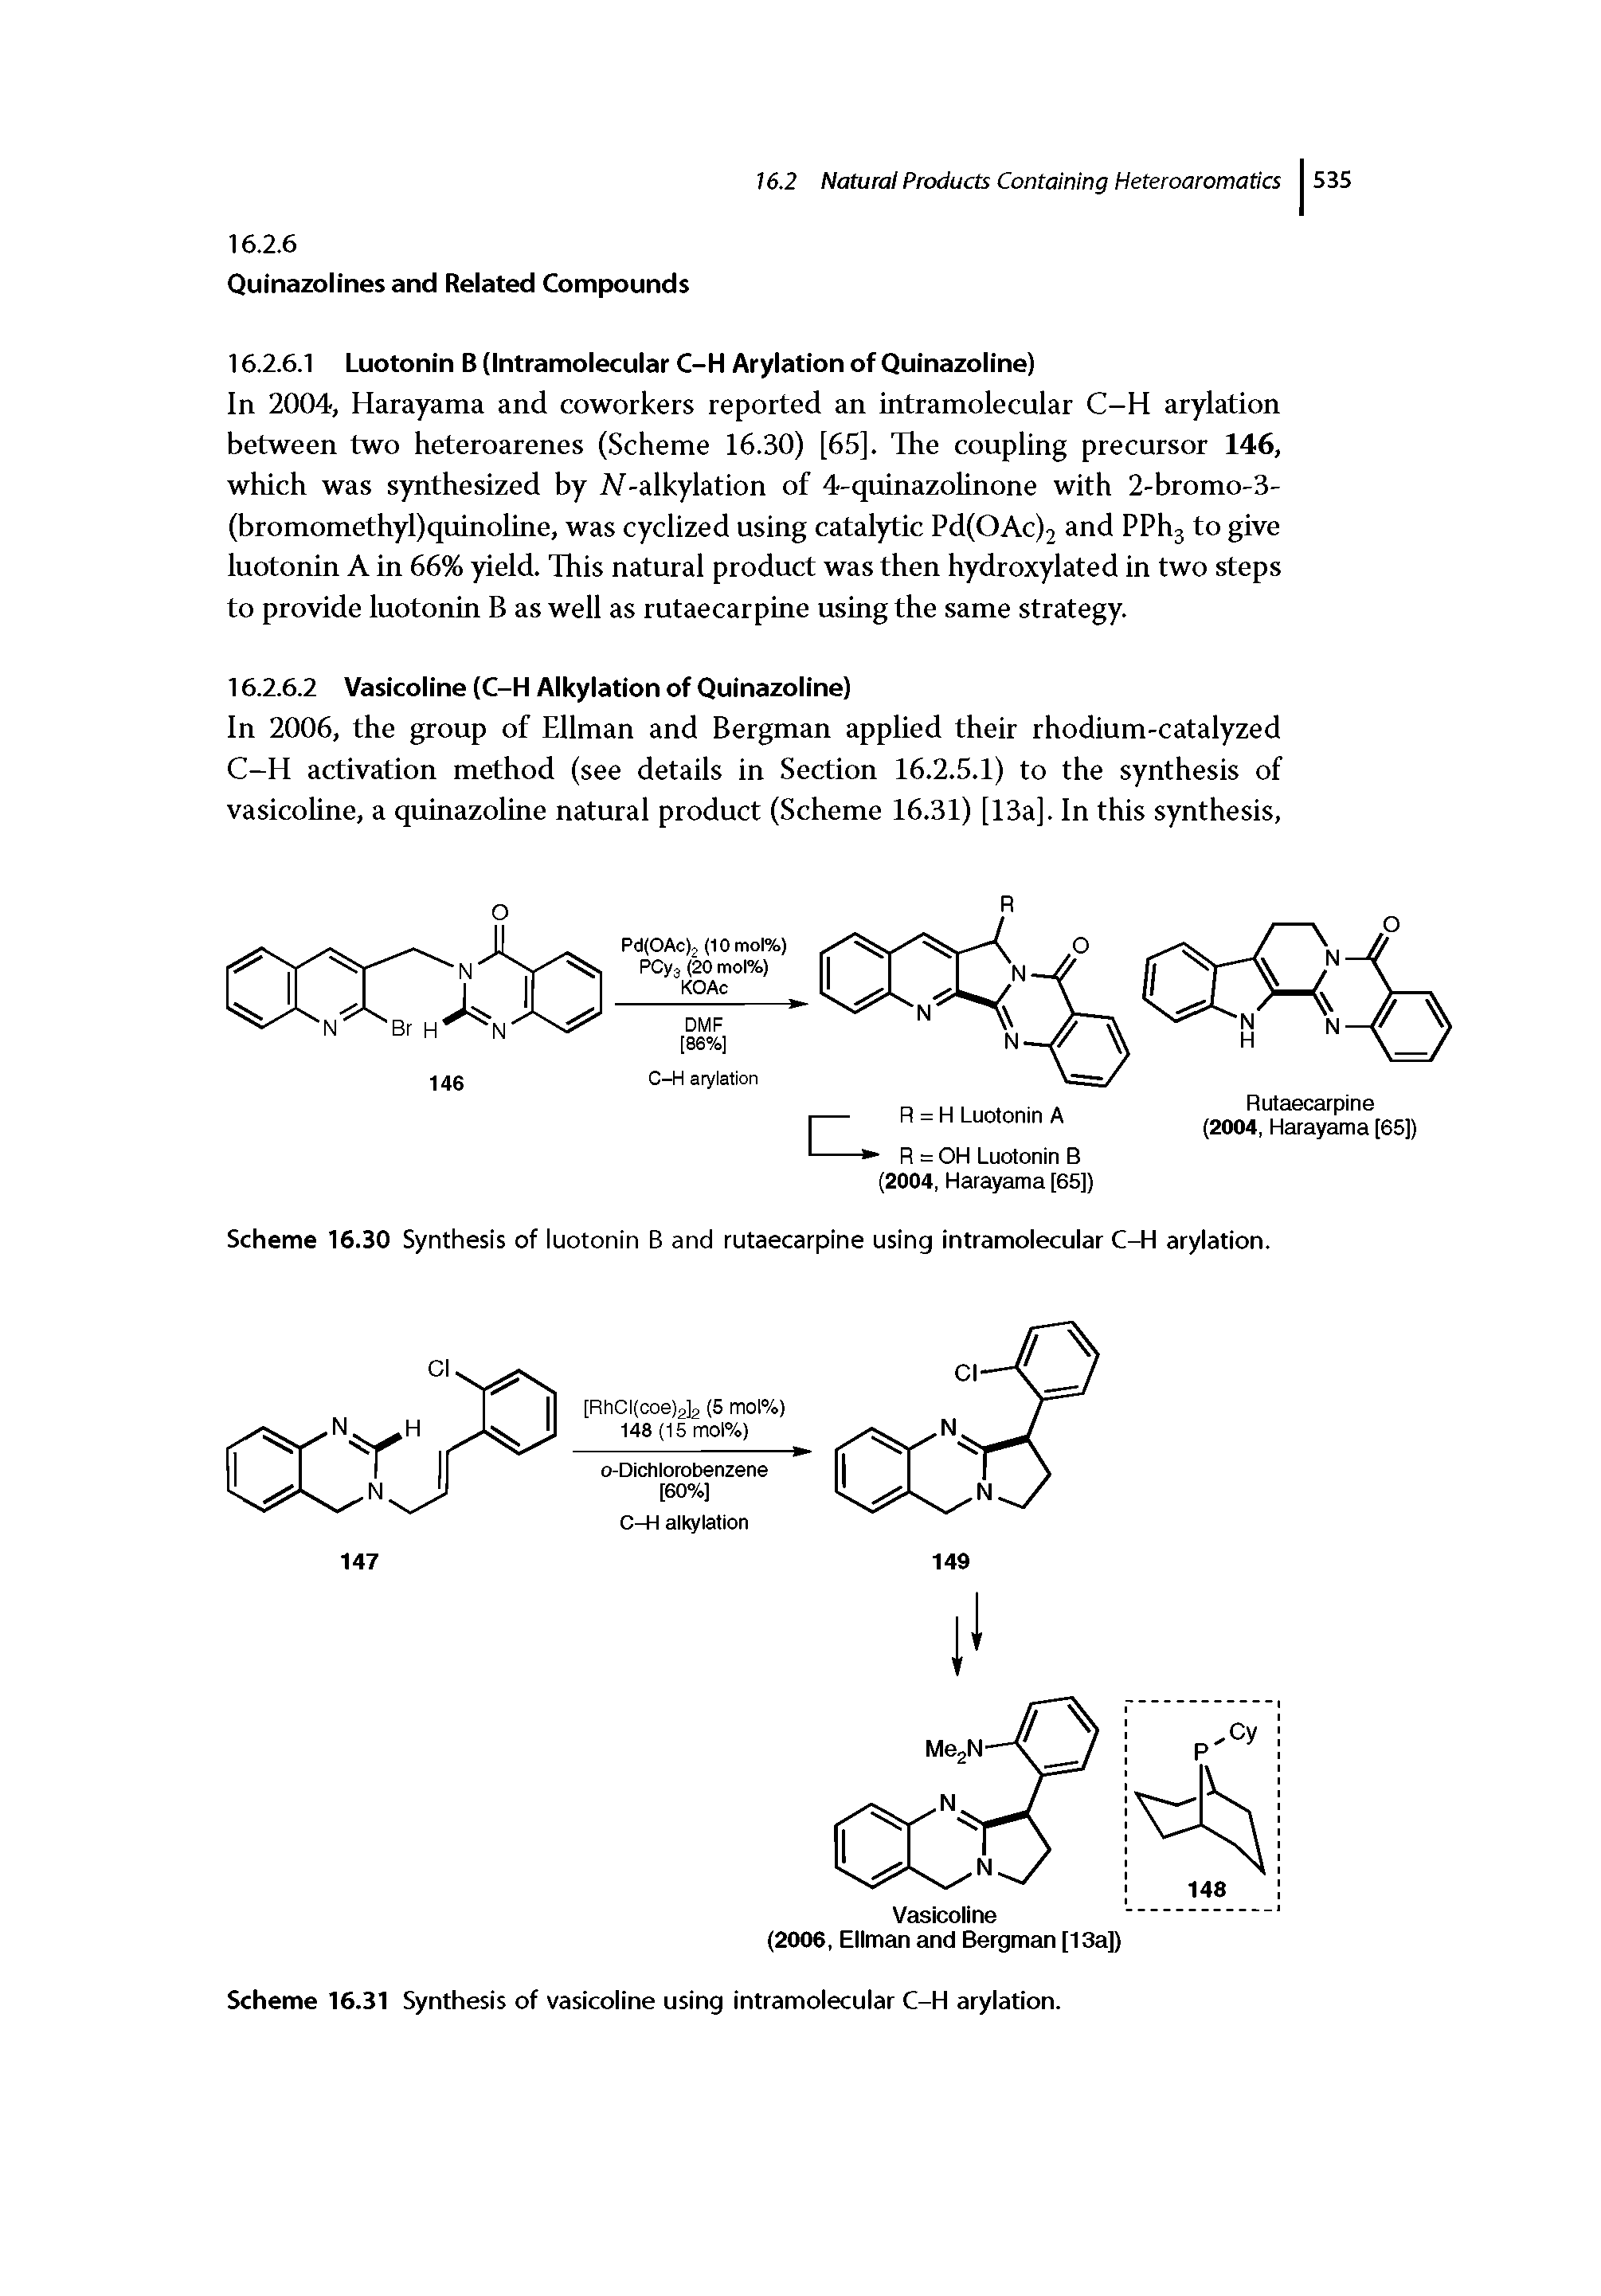 Scheme 16.30 Synthesis of luotonin B and rutaecarpine using intramolecular C-H arylation.